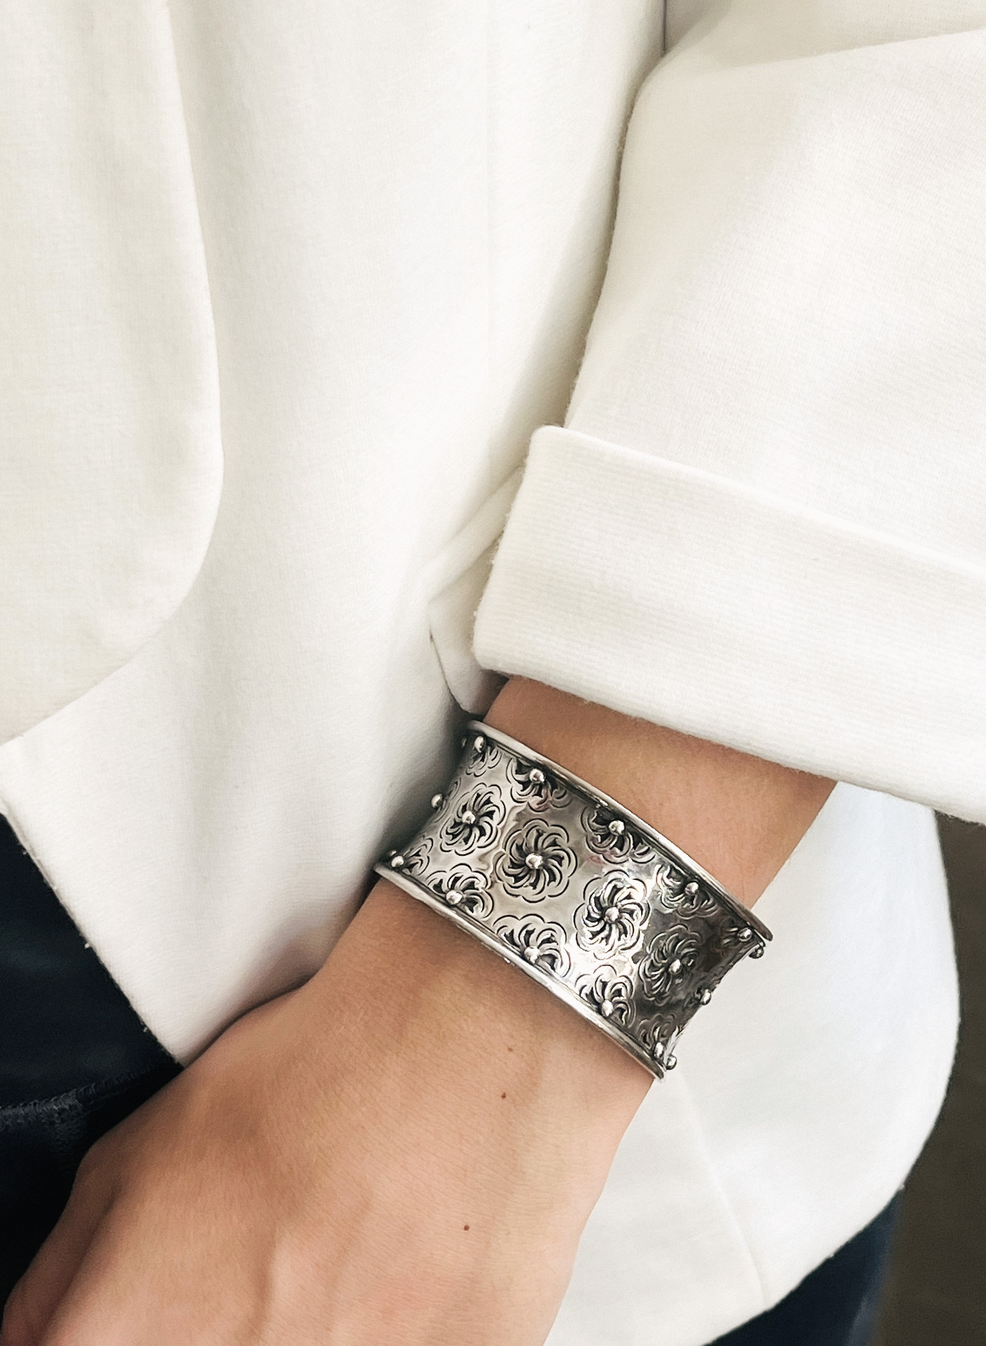 Sterling Cuff Bracelet with etched floral design.